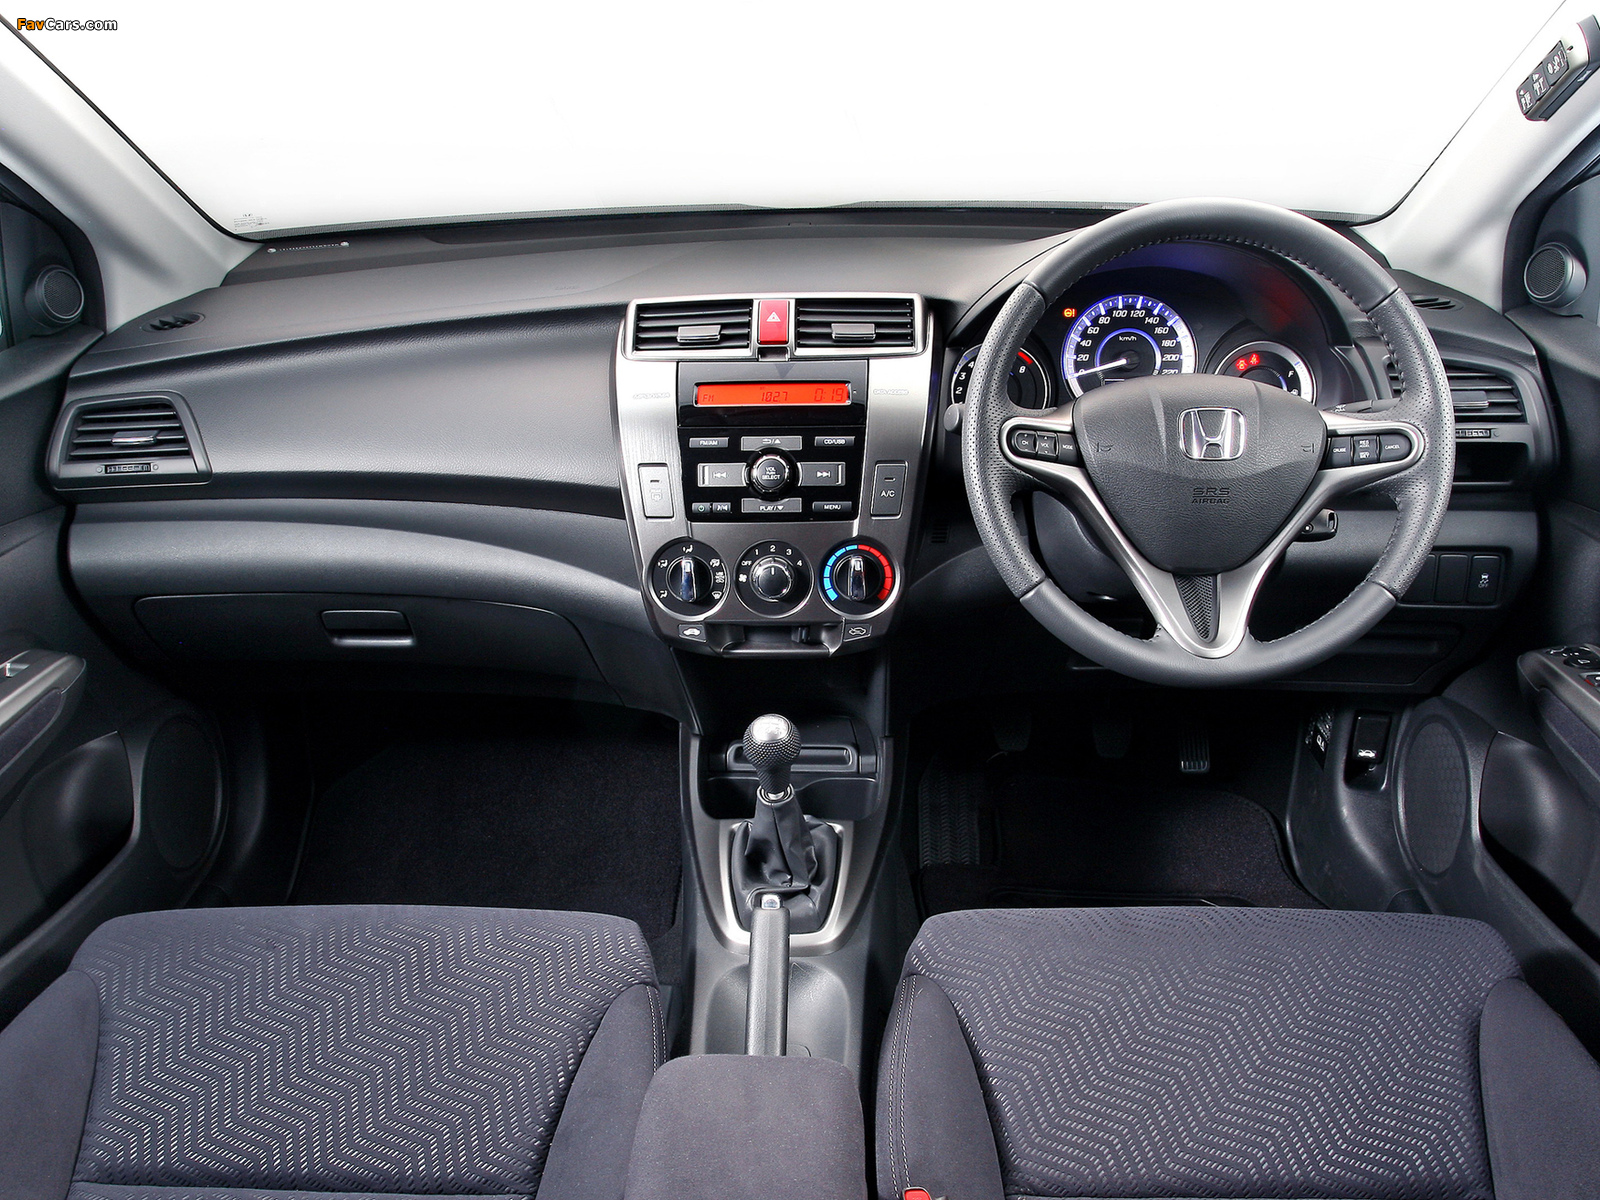 Honda Ballade 2012 images (1600 x 1200)